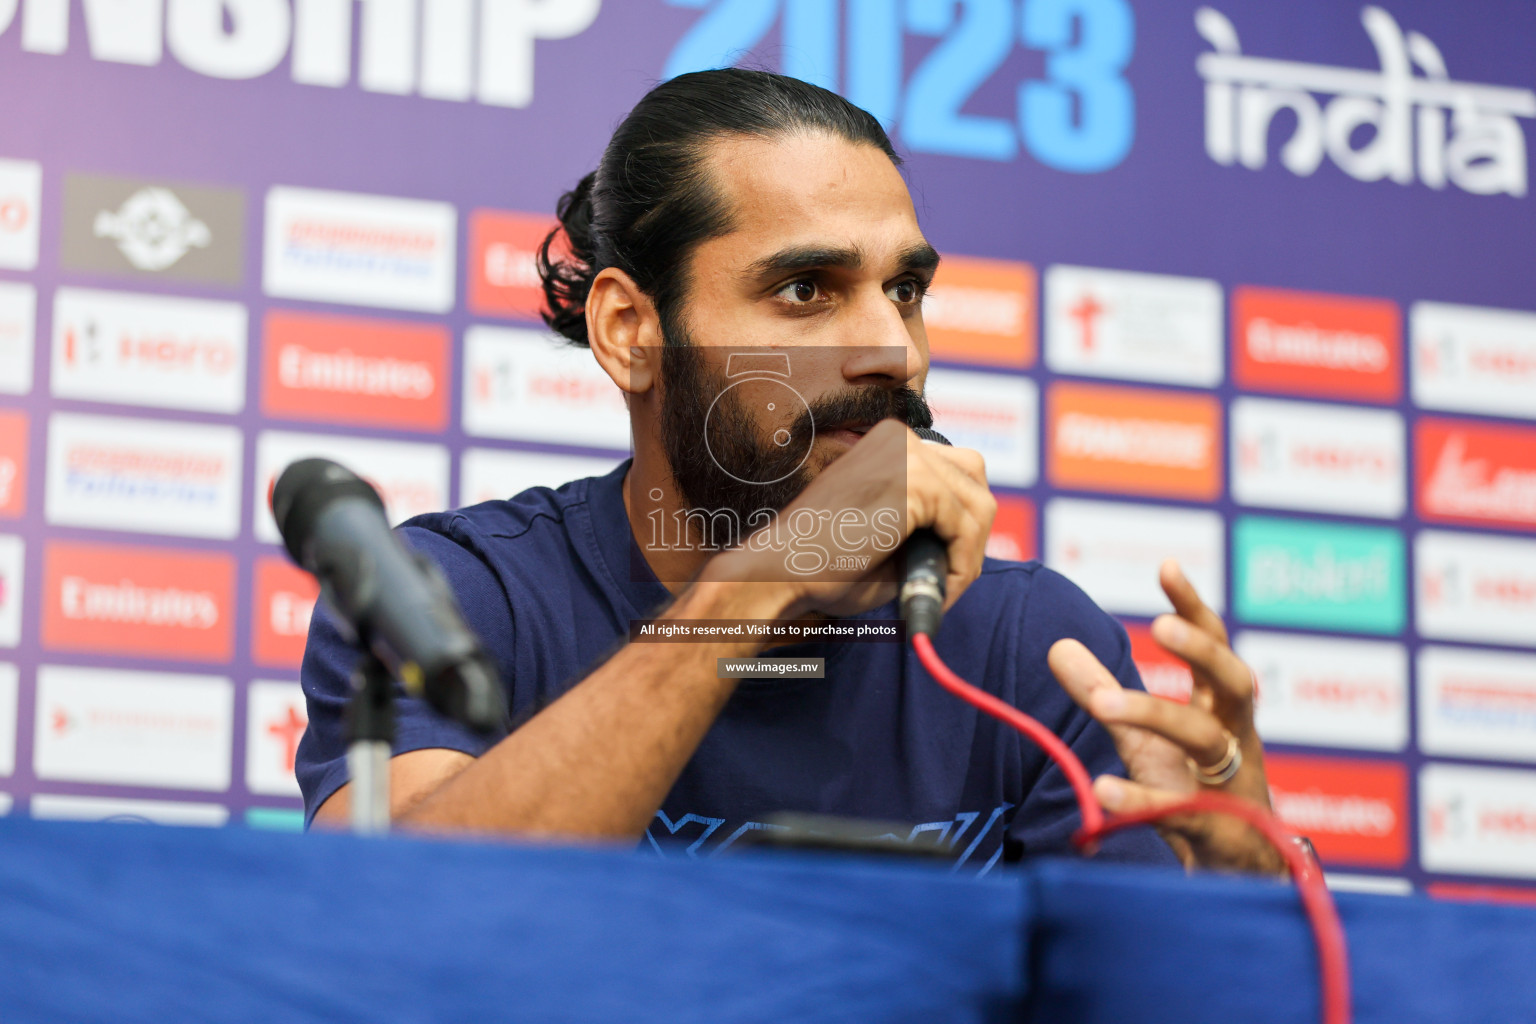 Saff Championship Final Pre-match press conference held in Sree Kanteerava Stadium, Bengaluru, India, on Monday, 3rd July 2023. Photos: Nausham Waheed / images.mv